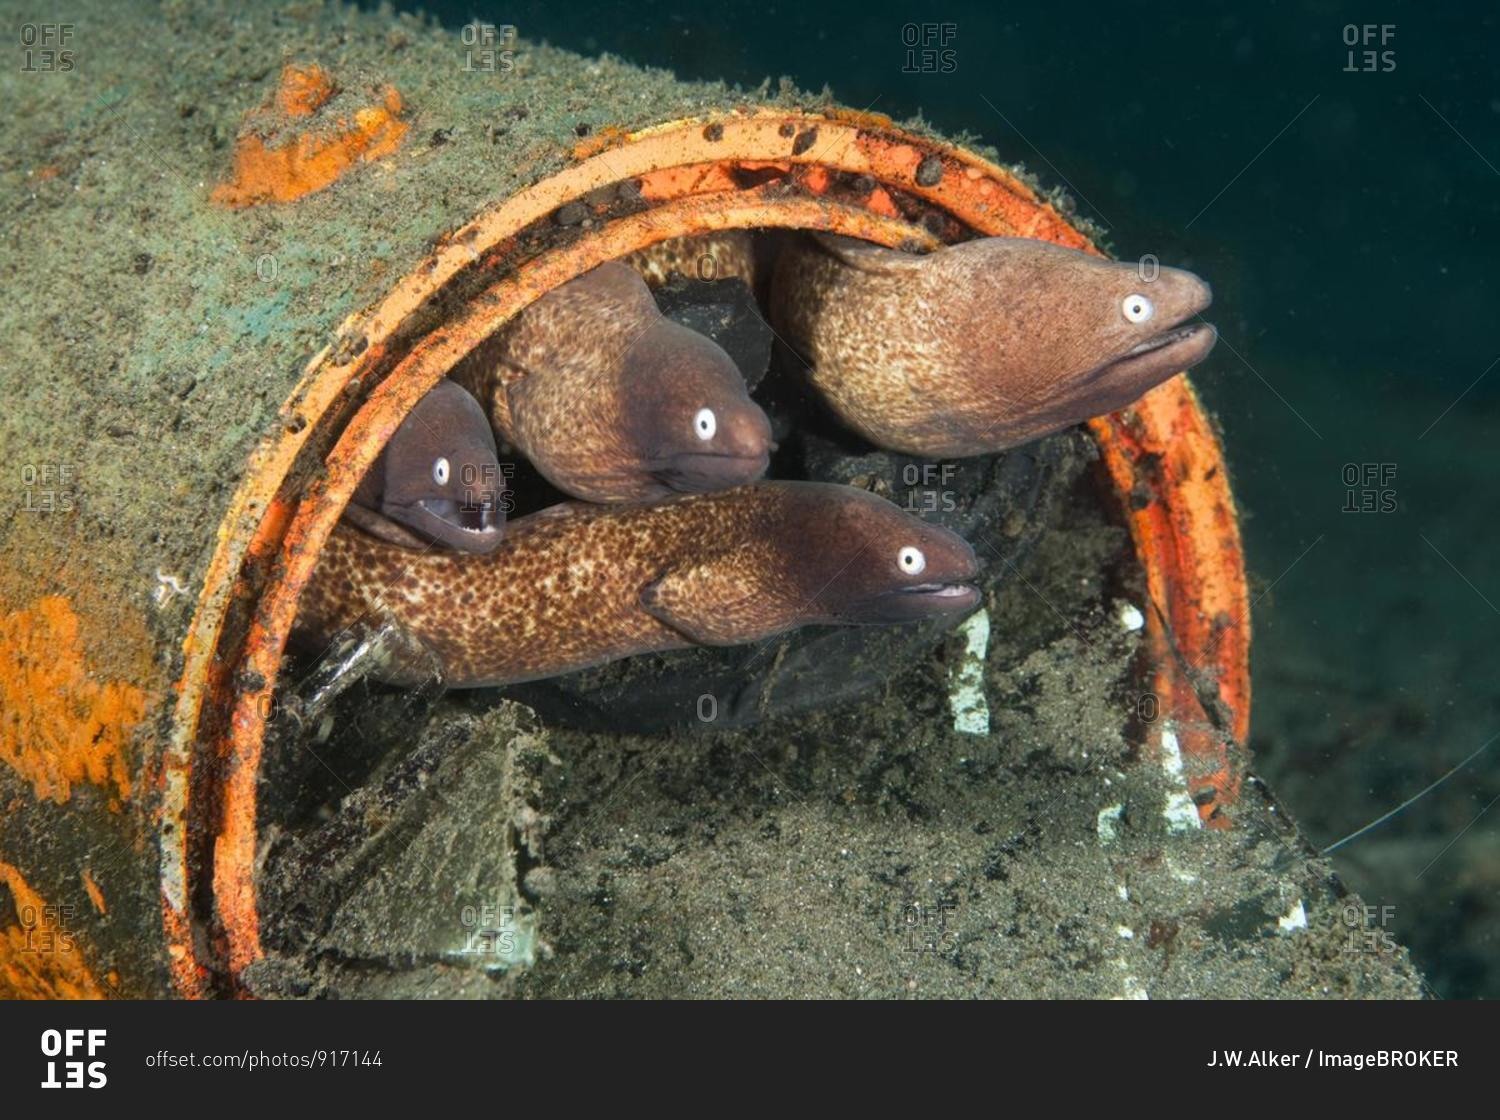 White-eyed Moray Eels (Siderea thyrsoidea) using an old tin can as habitation, Indonesia, Southeast Asia, Asia